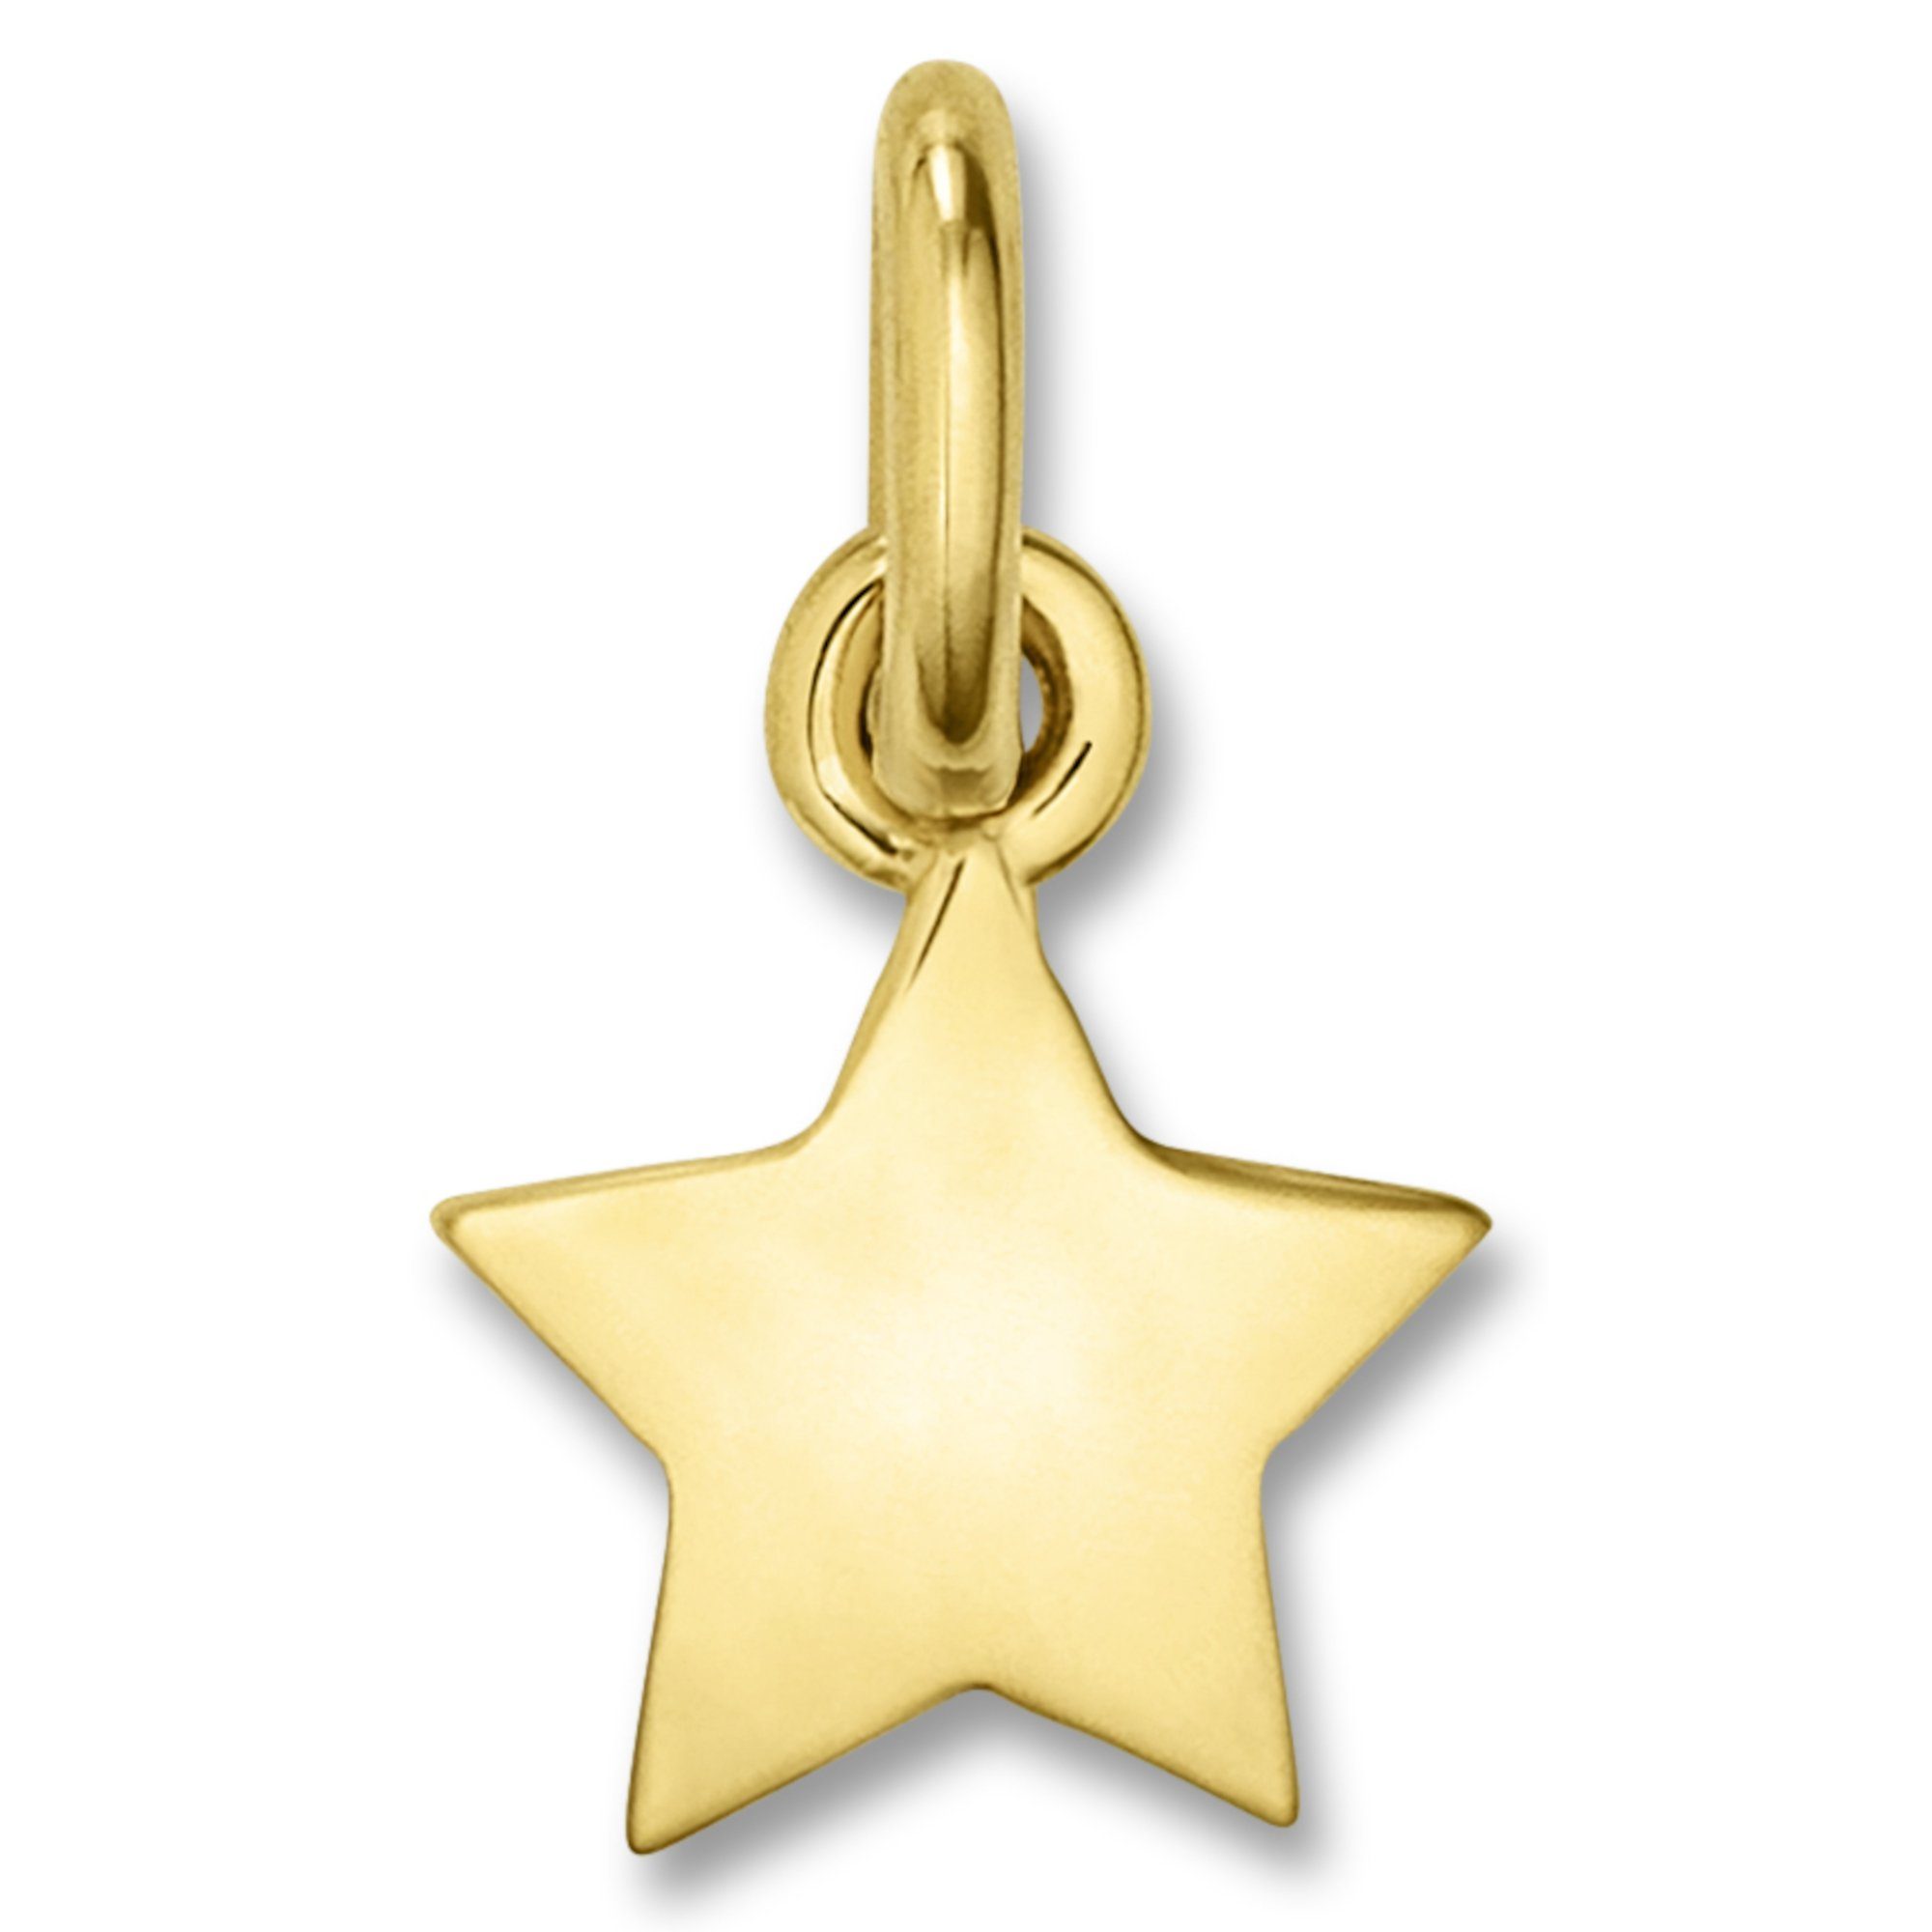 ONE ELEMENT Kettenanhänger Stern Anhänger aus 333 Gelbgold, Damen Gold Schmuck Stern | Kettenanhänger